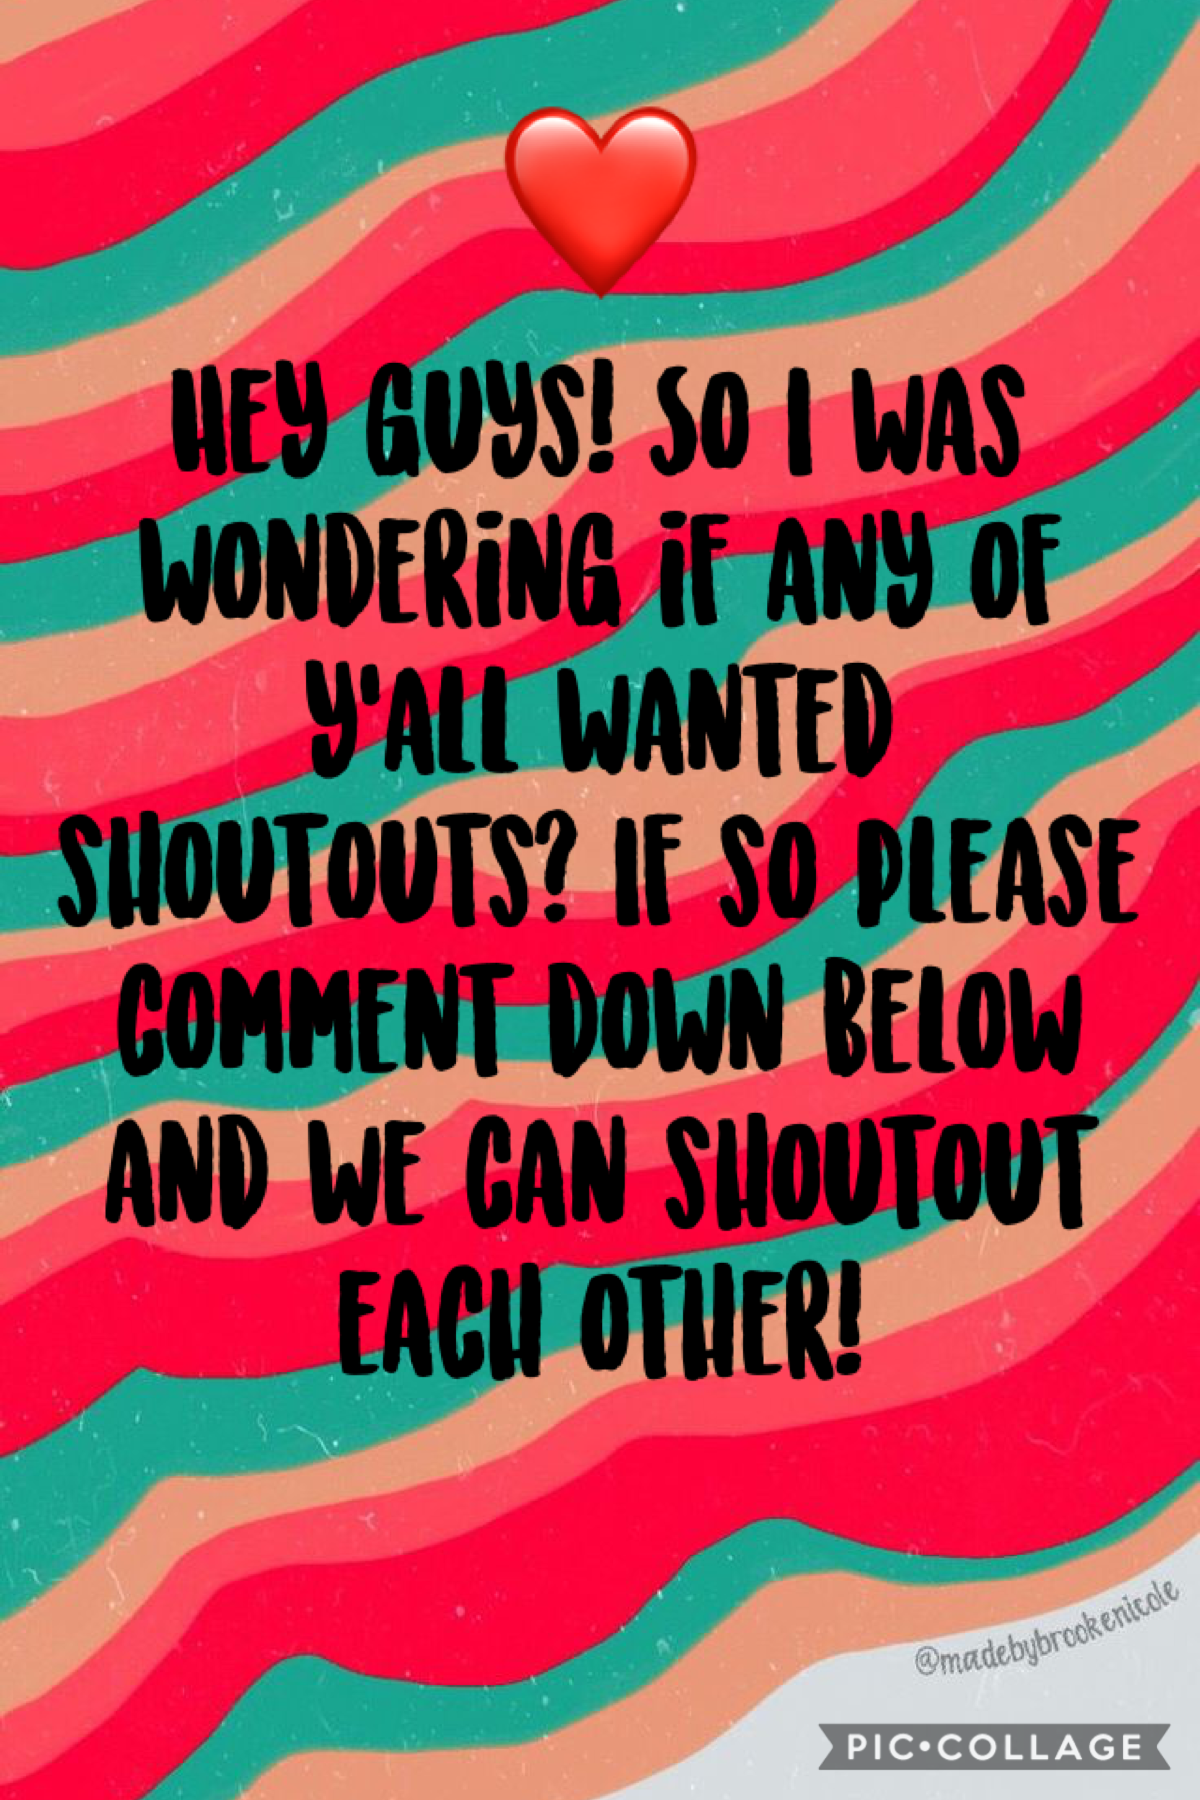 shoutout opportunity! 😃✨